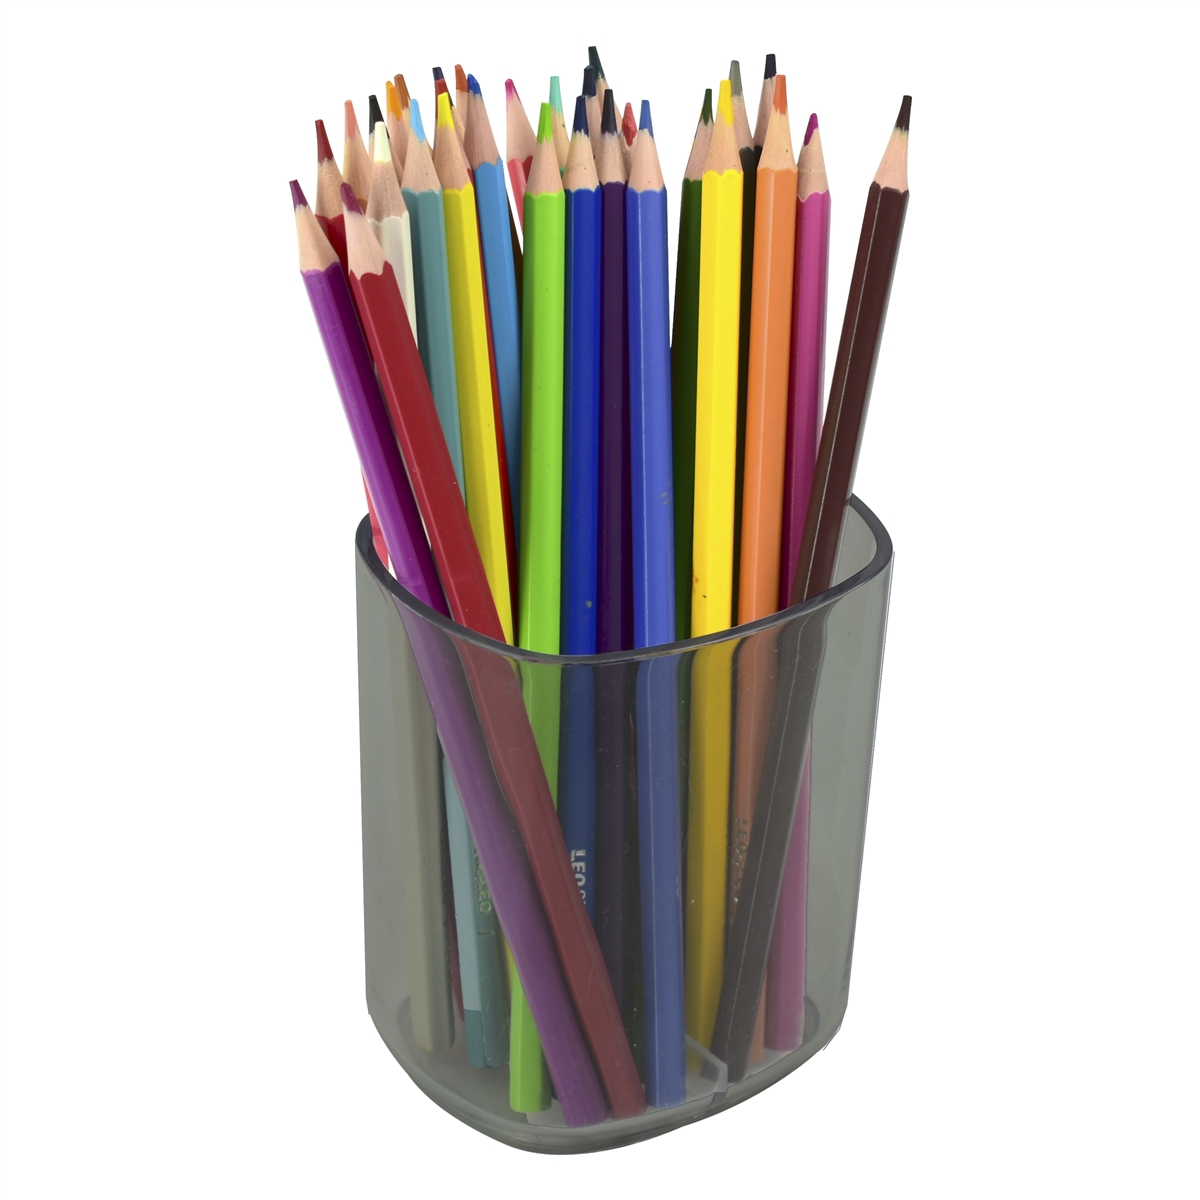 Acrimet Jumbo Pencil Holder, Pen Cup, Caddy Super-Sized Desktop Black